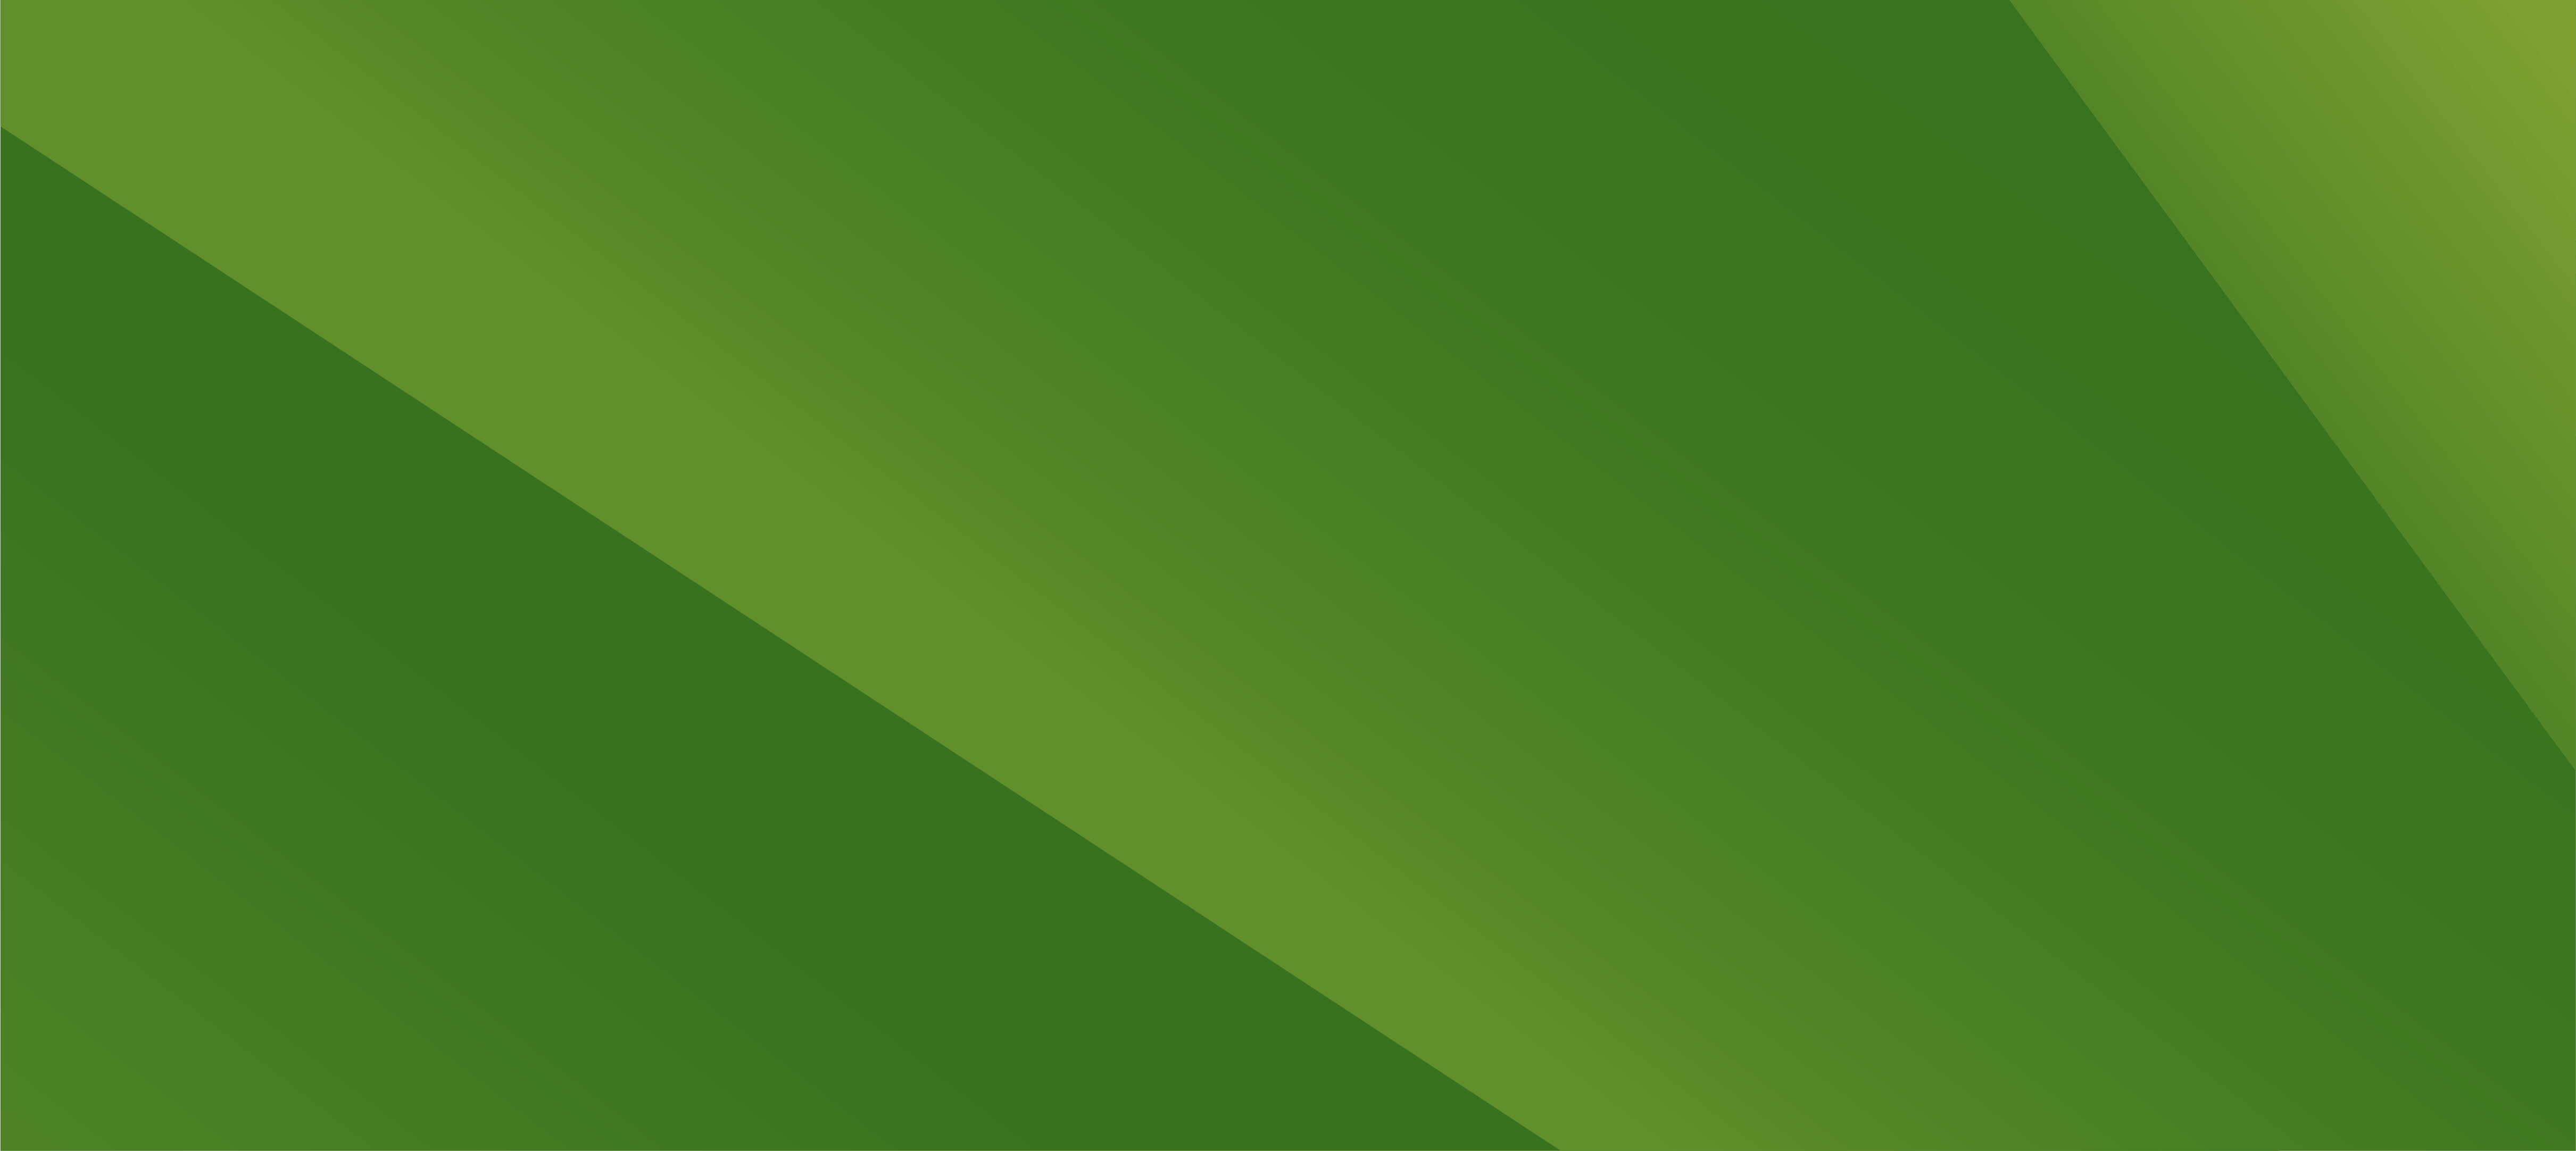 green teaser for hotline benchmarking webinar